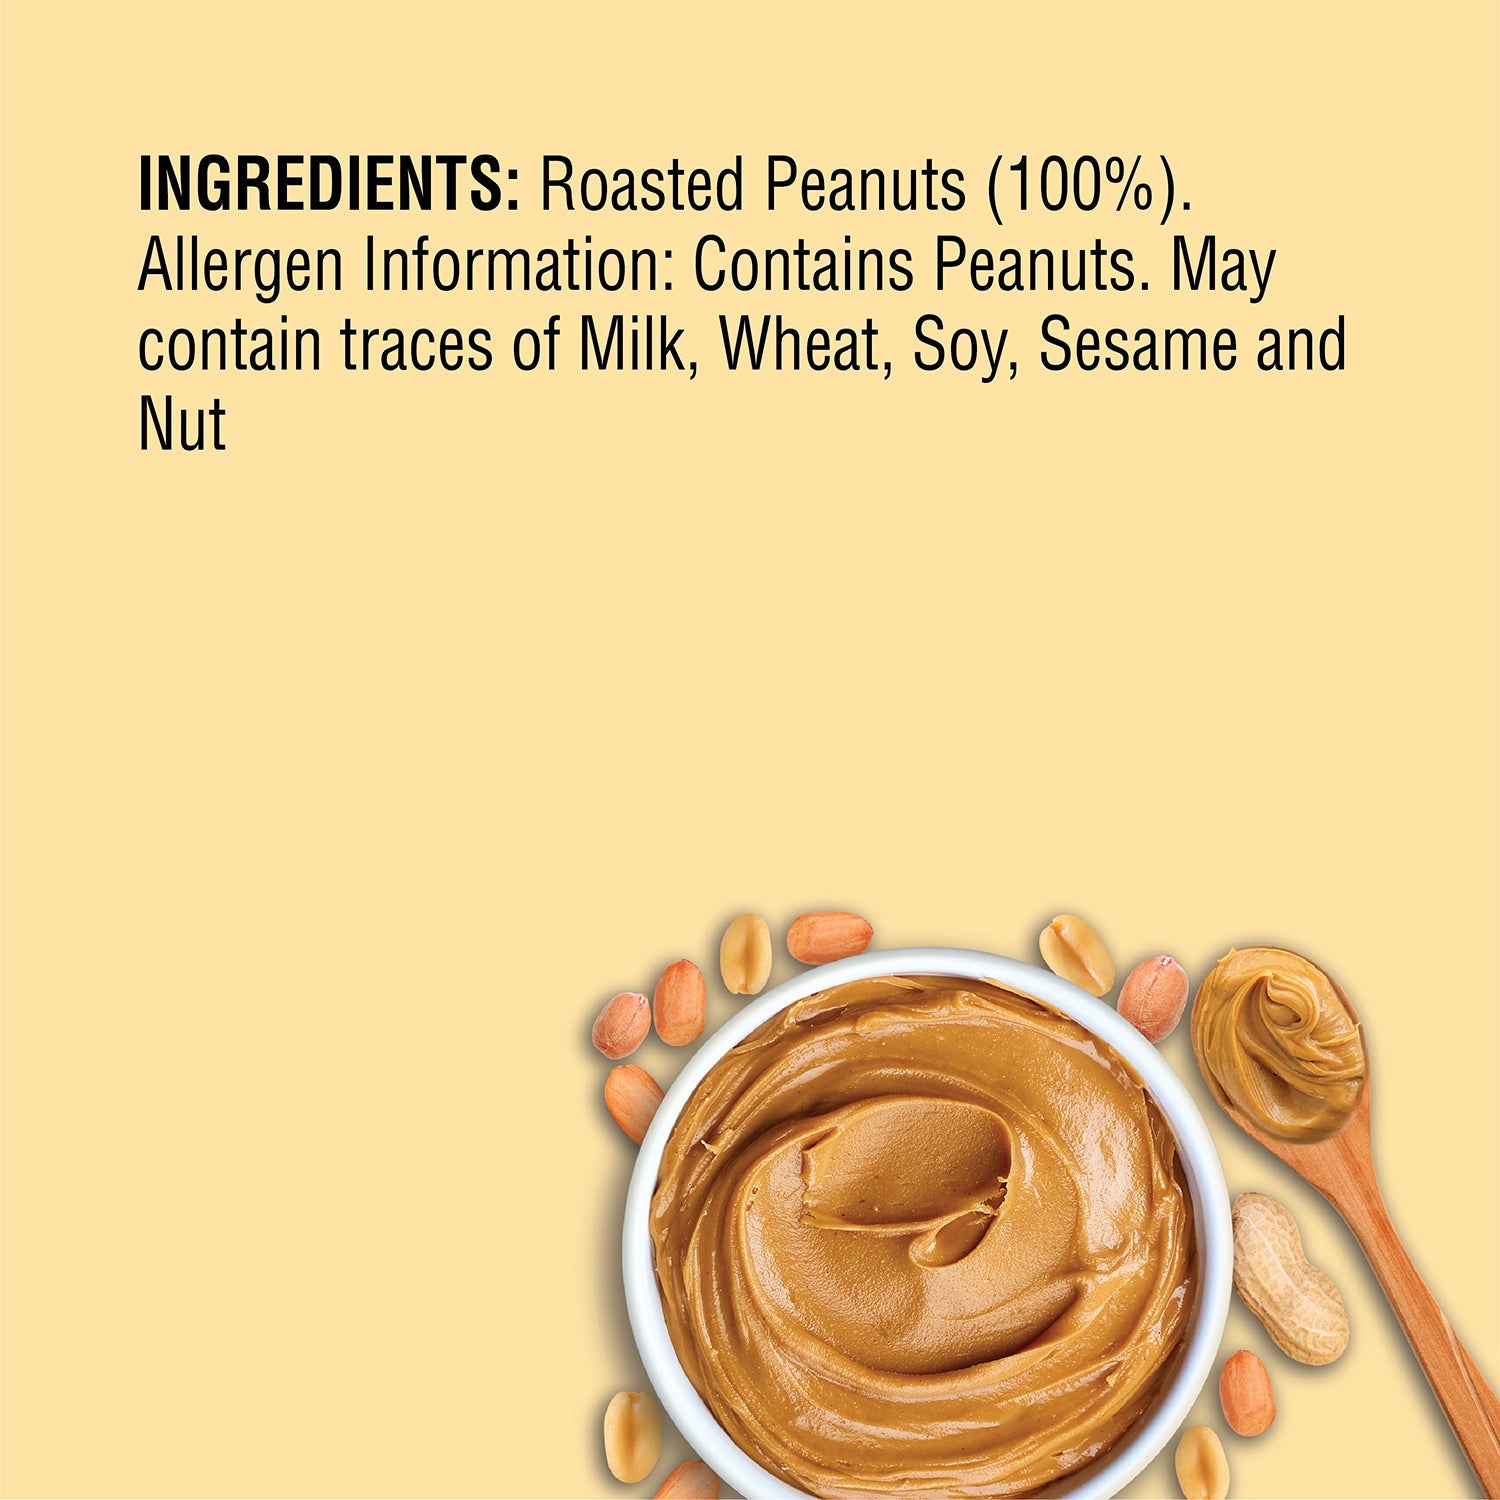 [SALE] Saffola Fittify Natural Peanut Butter Unsweetened Super Creamy 925g